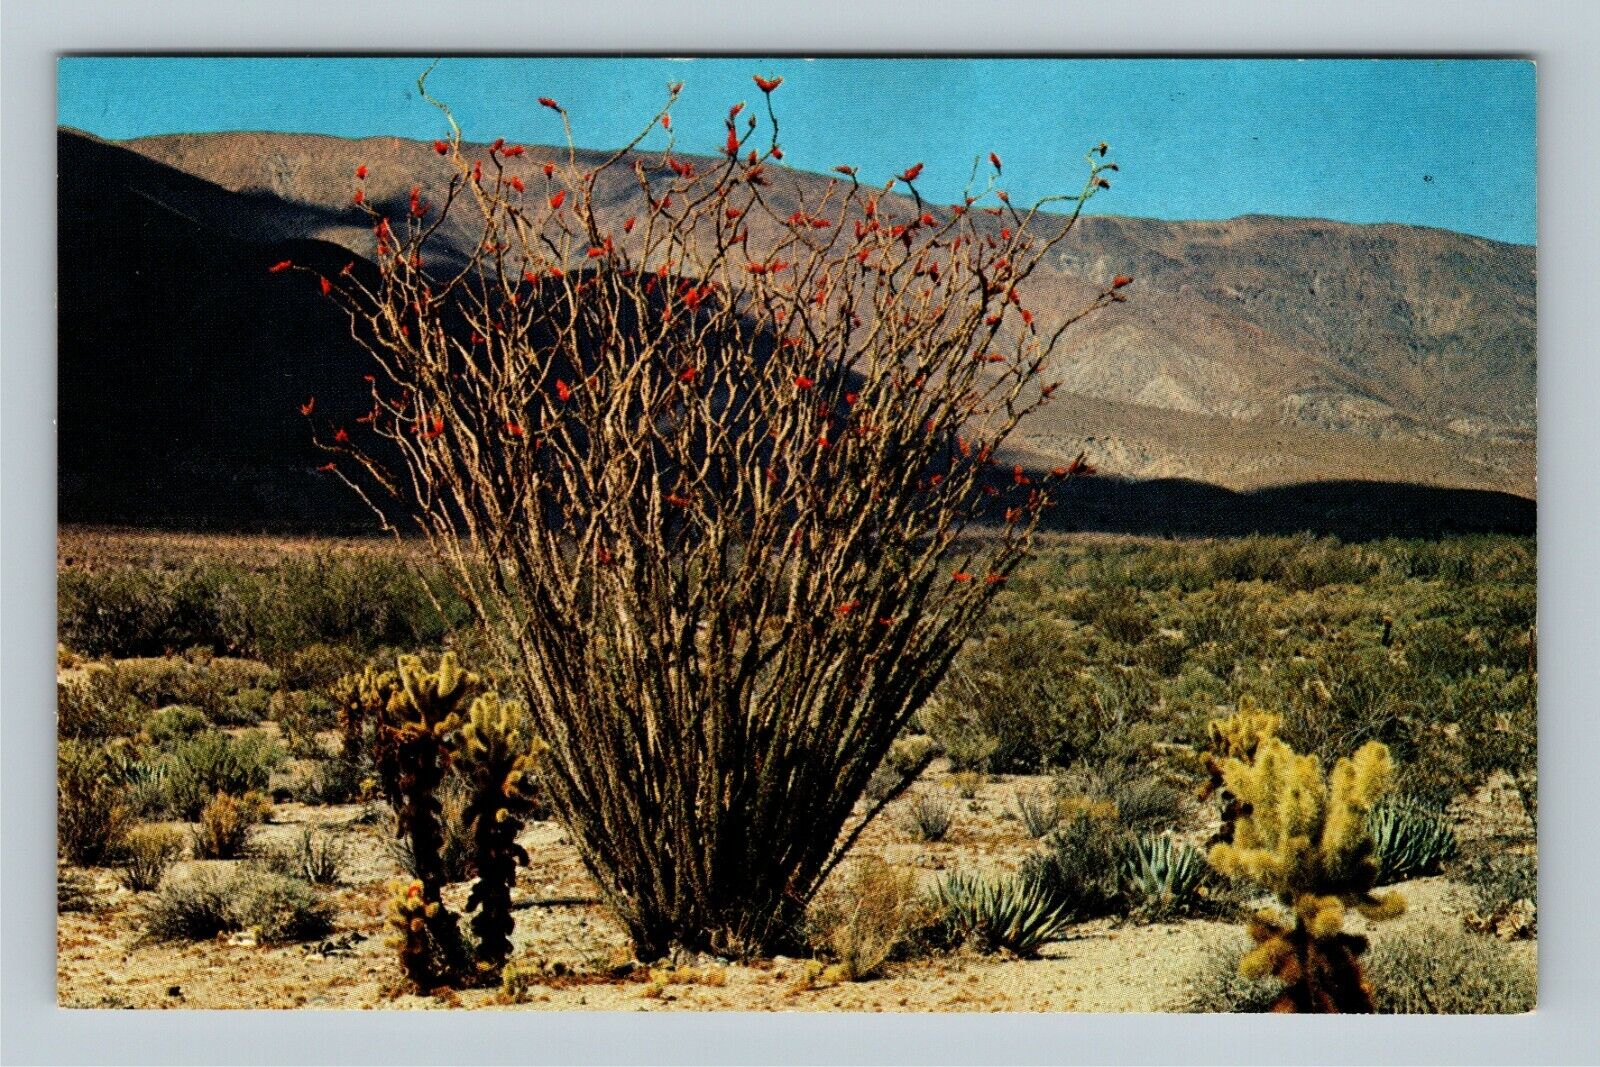 Ocotillo, Thorny, Scarlet-Flowered Desert Flora, Vintage Postcard